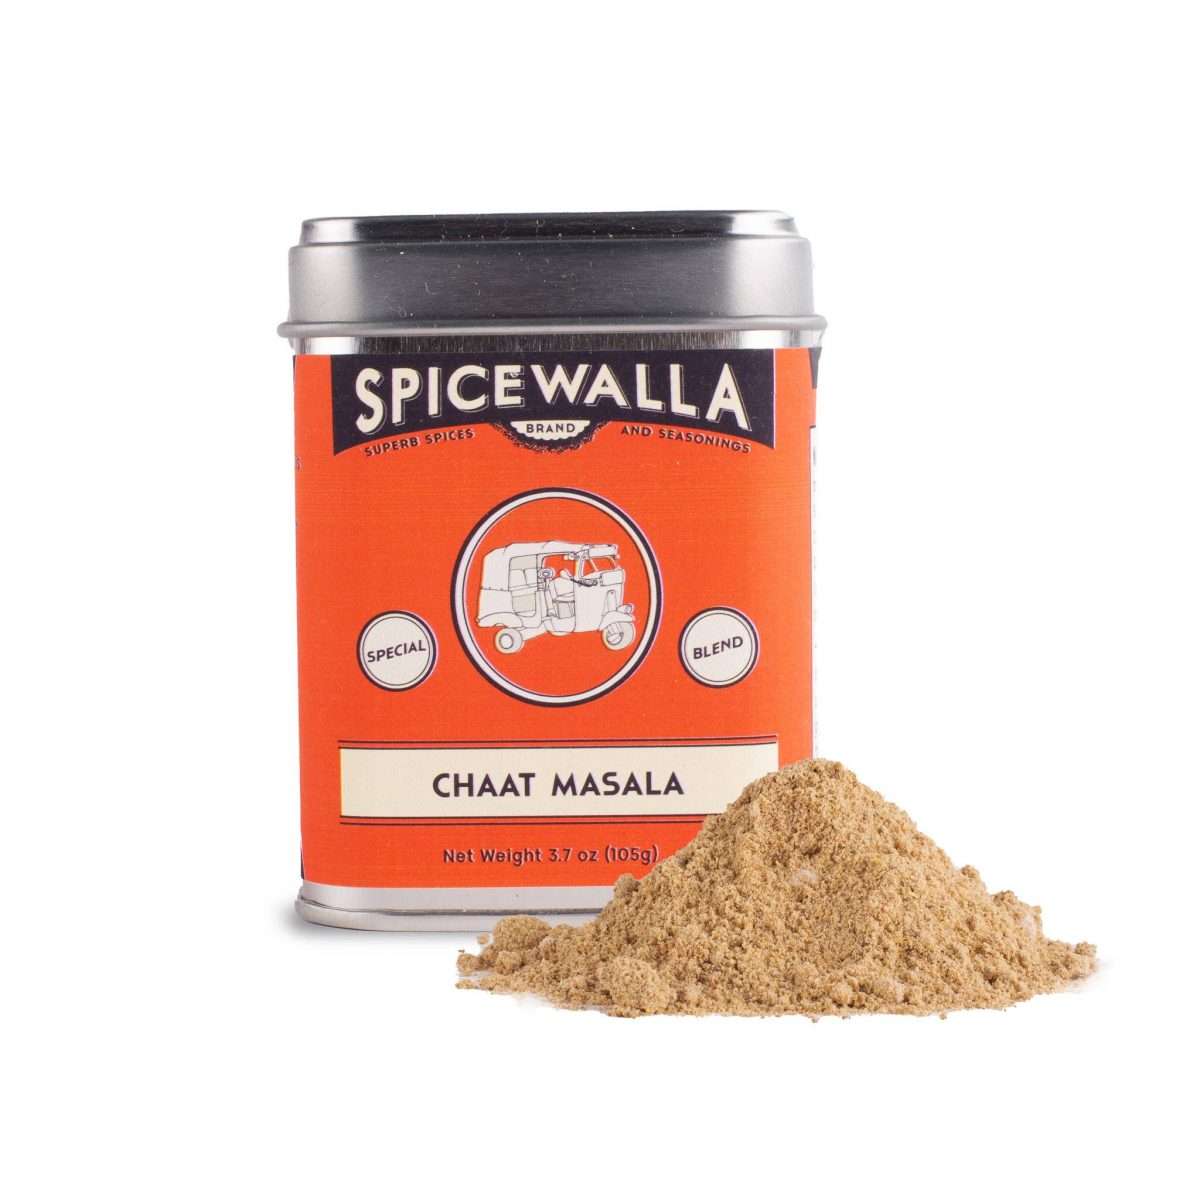 Spicewalla Chaat masala in a large tin